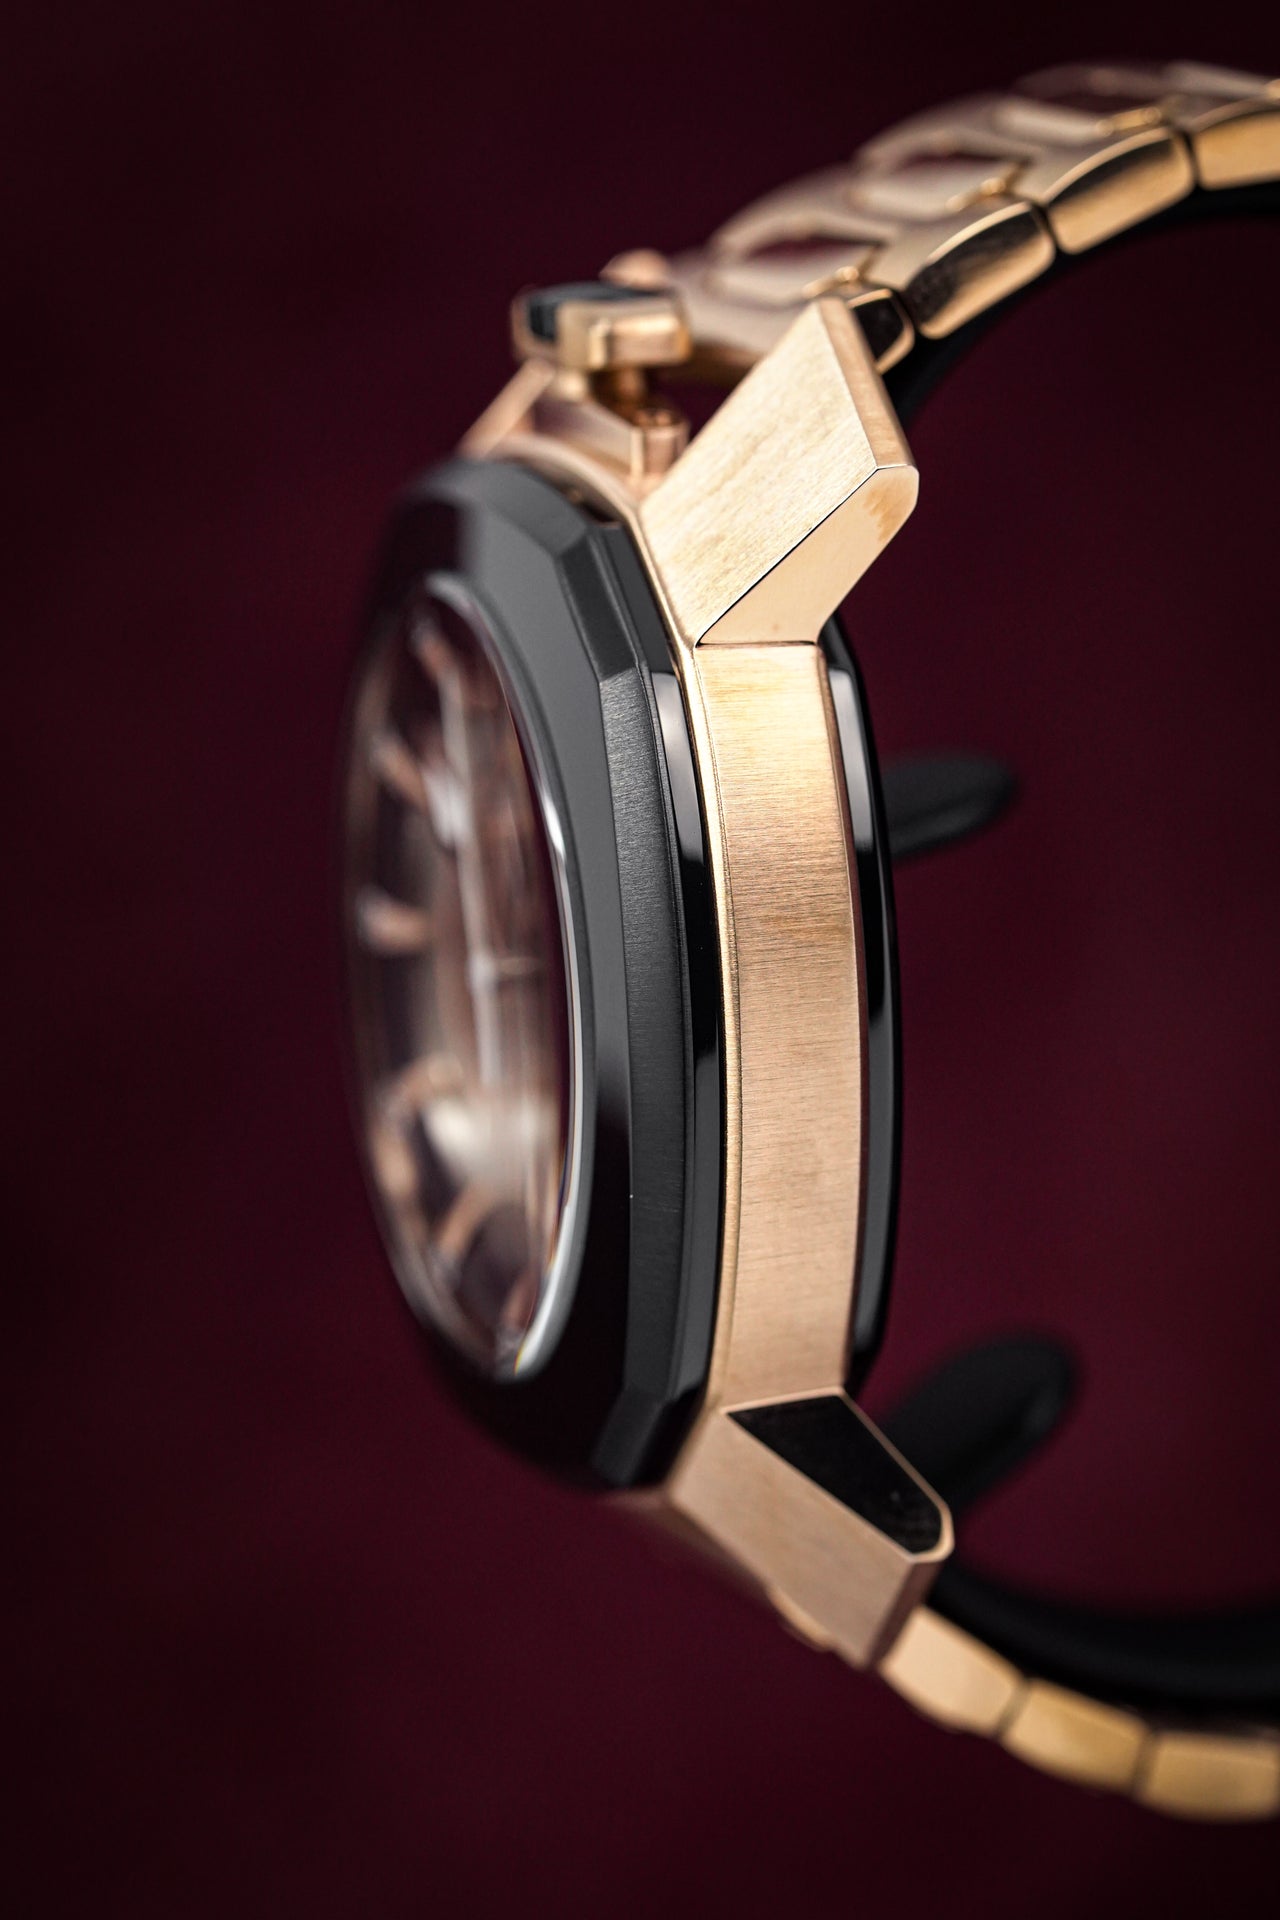 Gaga Milano Automatic Watch Frame_One Skeleton Rose Gold 7074.01